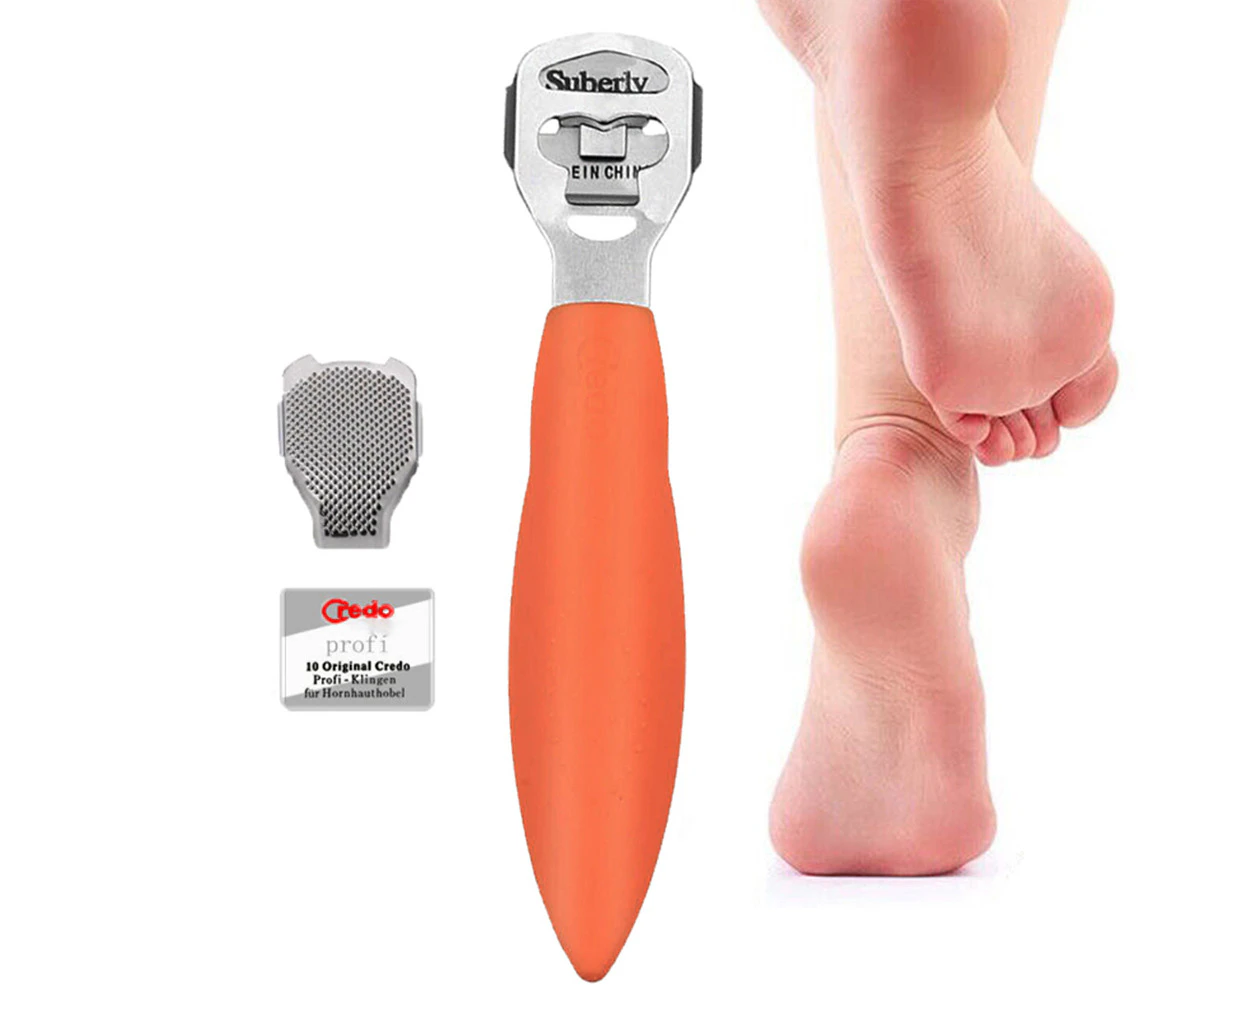 Foot Callus Shaver Hard Skin Corn Remover with 10 Blades -White